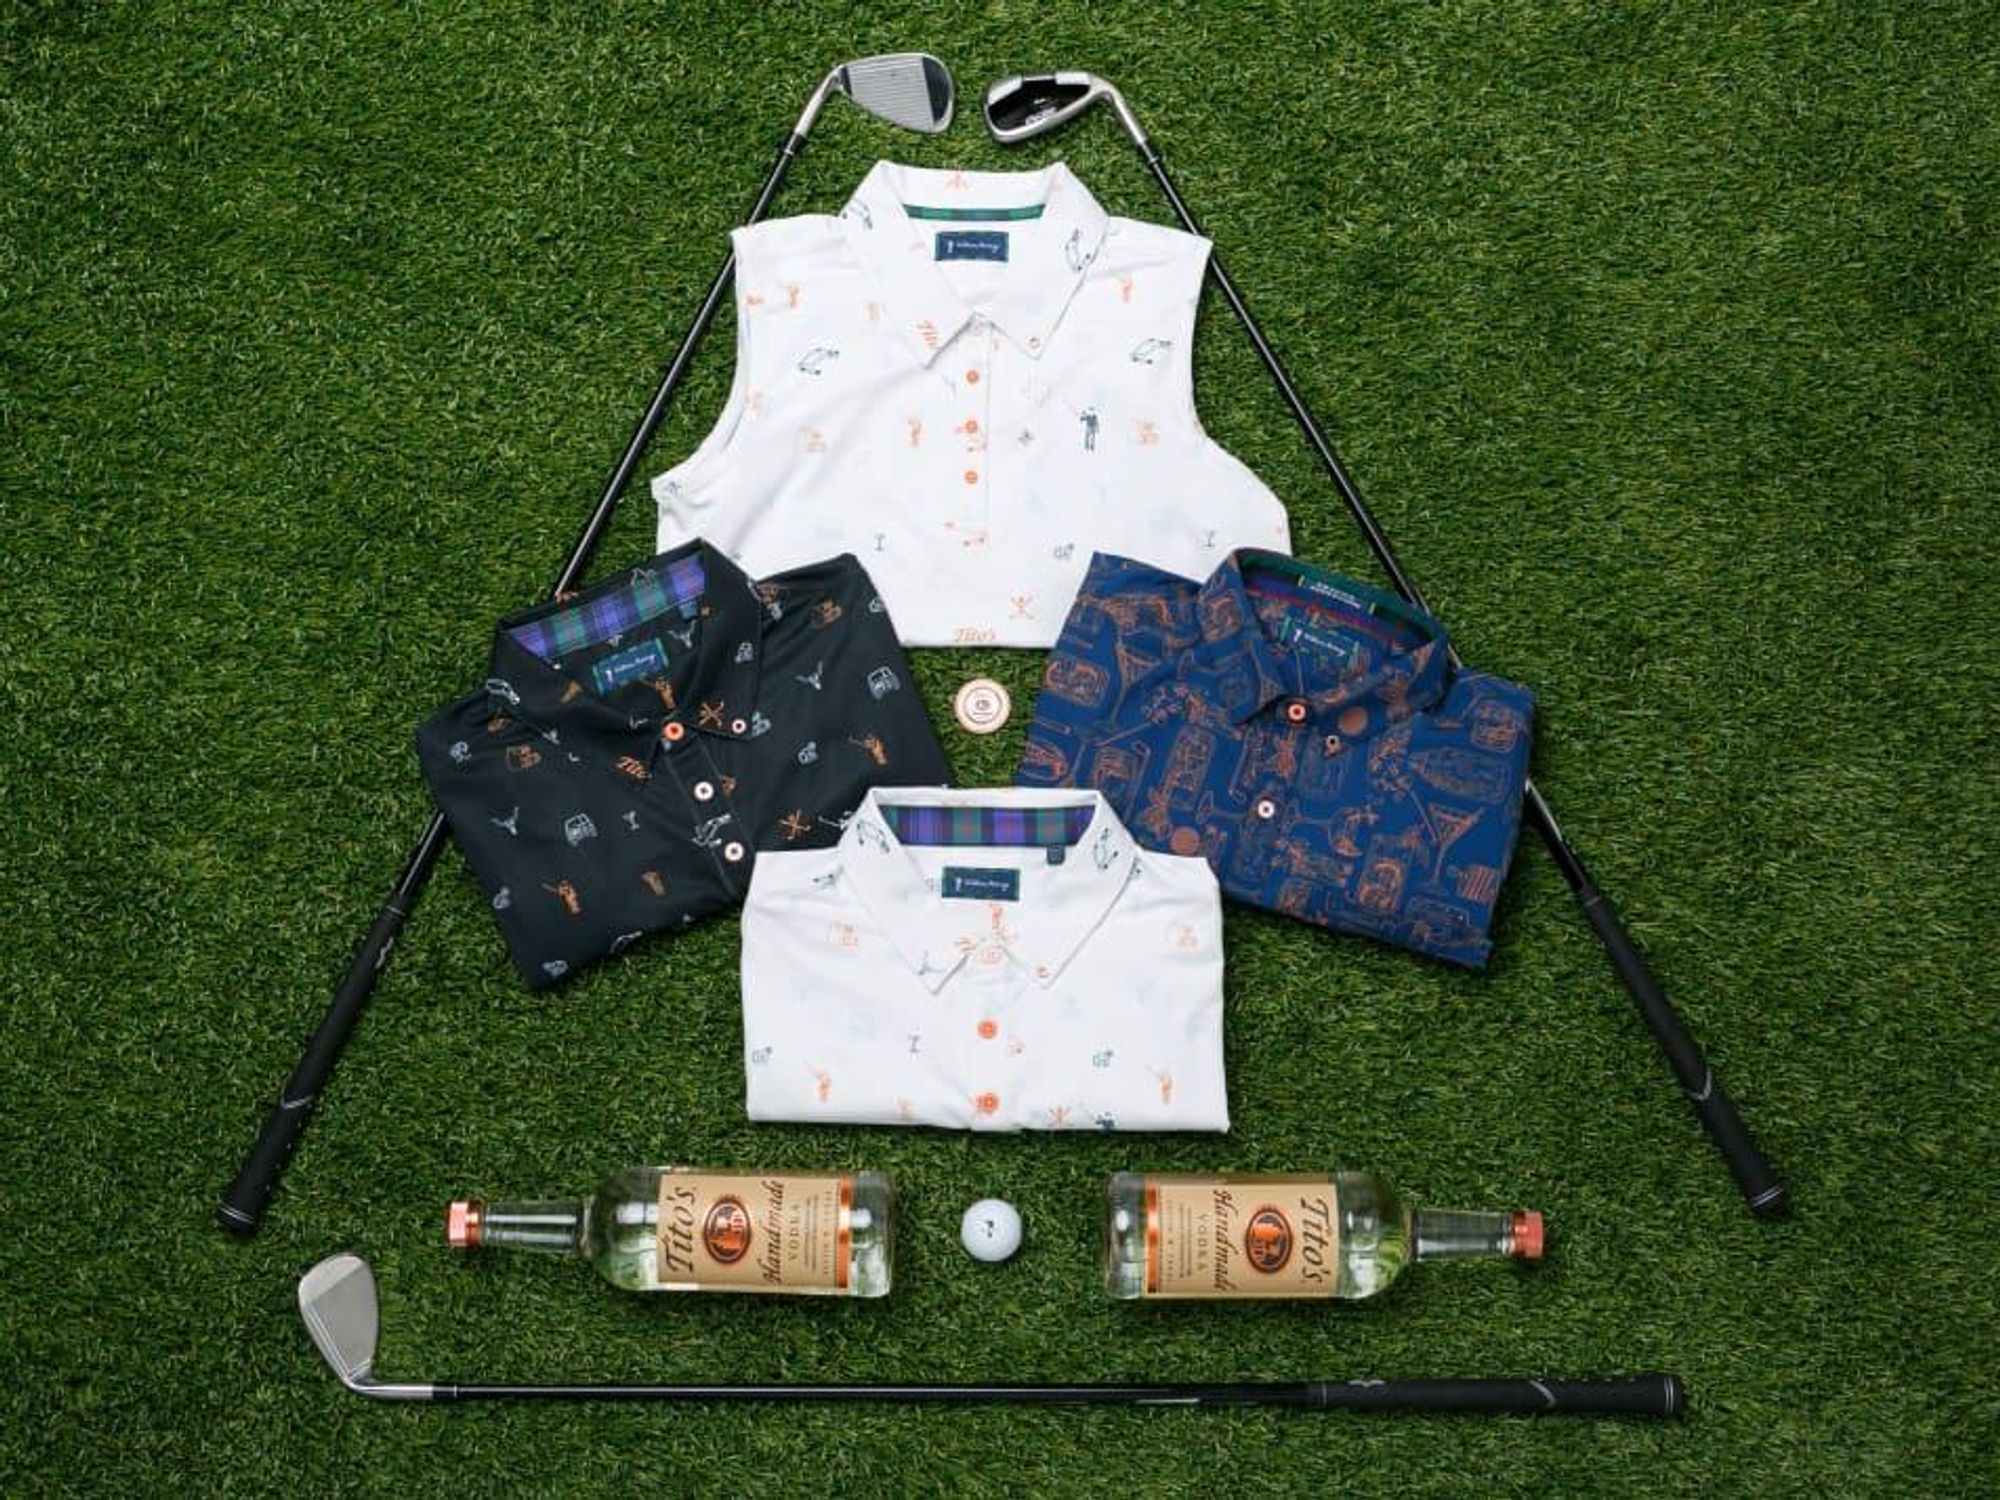 Tito's X William Murray Golf clothing Austin